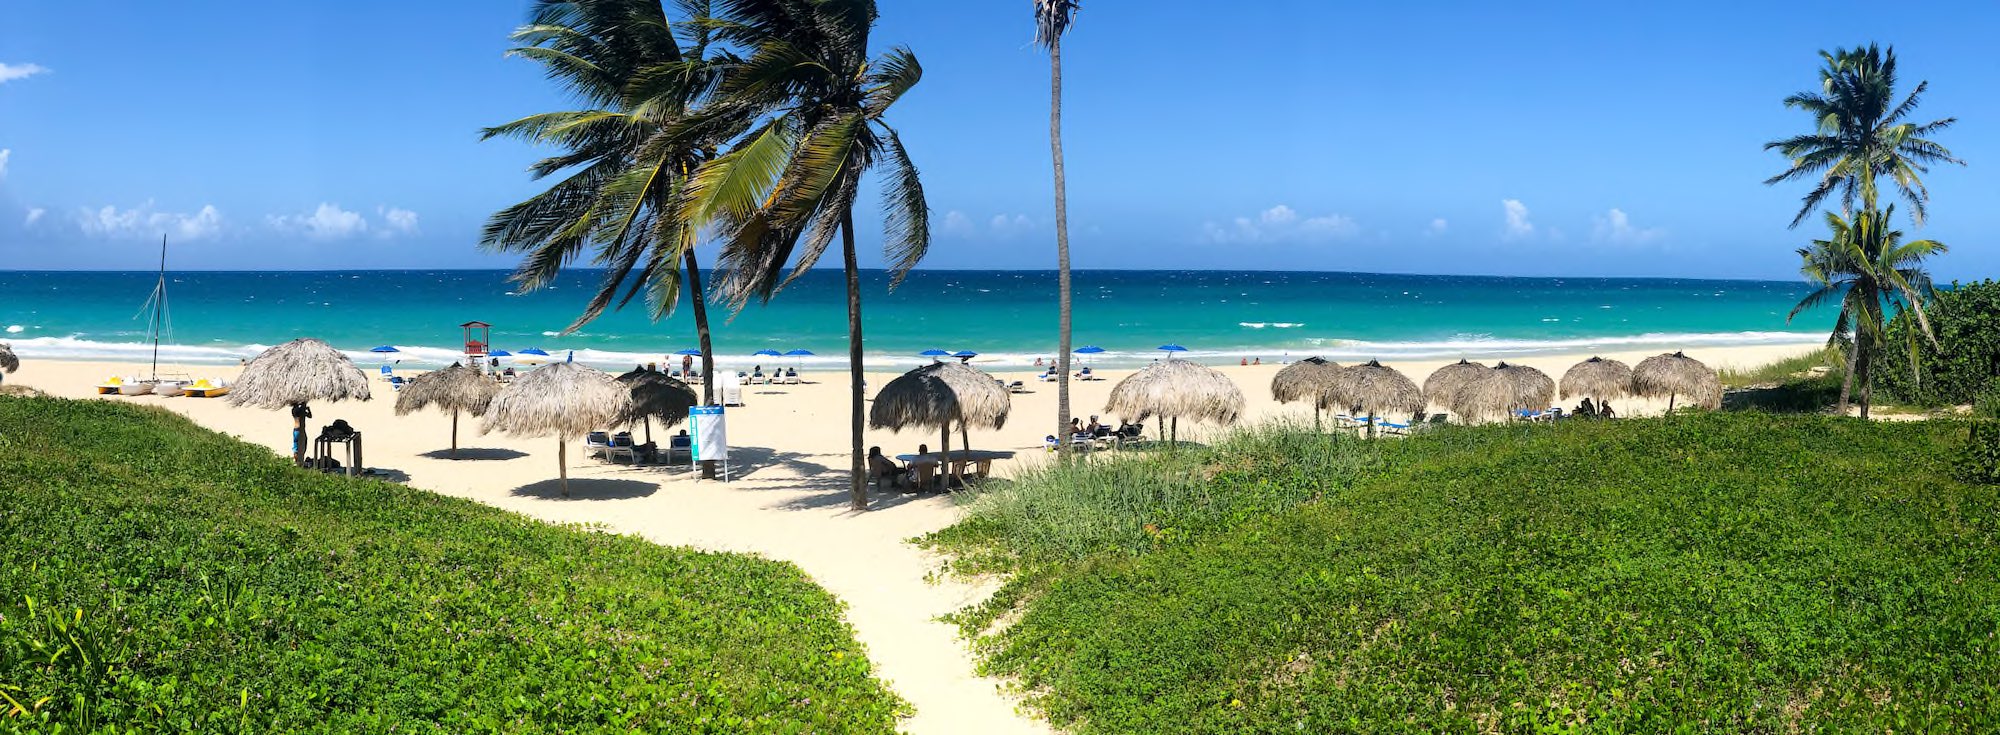 Kuba Urlaubsreisen Copyright © AdobeStock 278995650 bonandbon